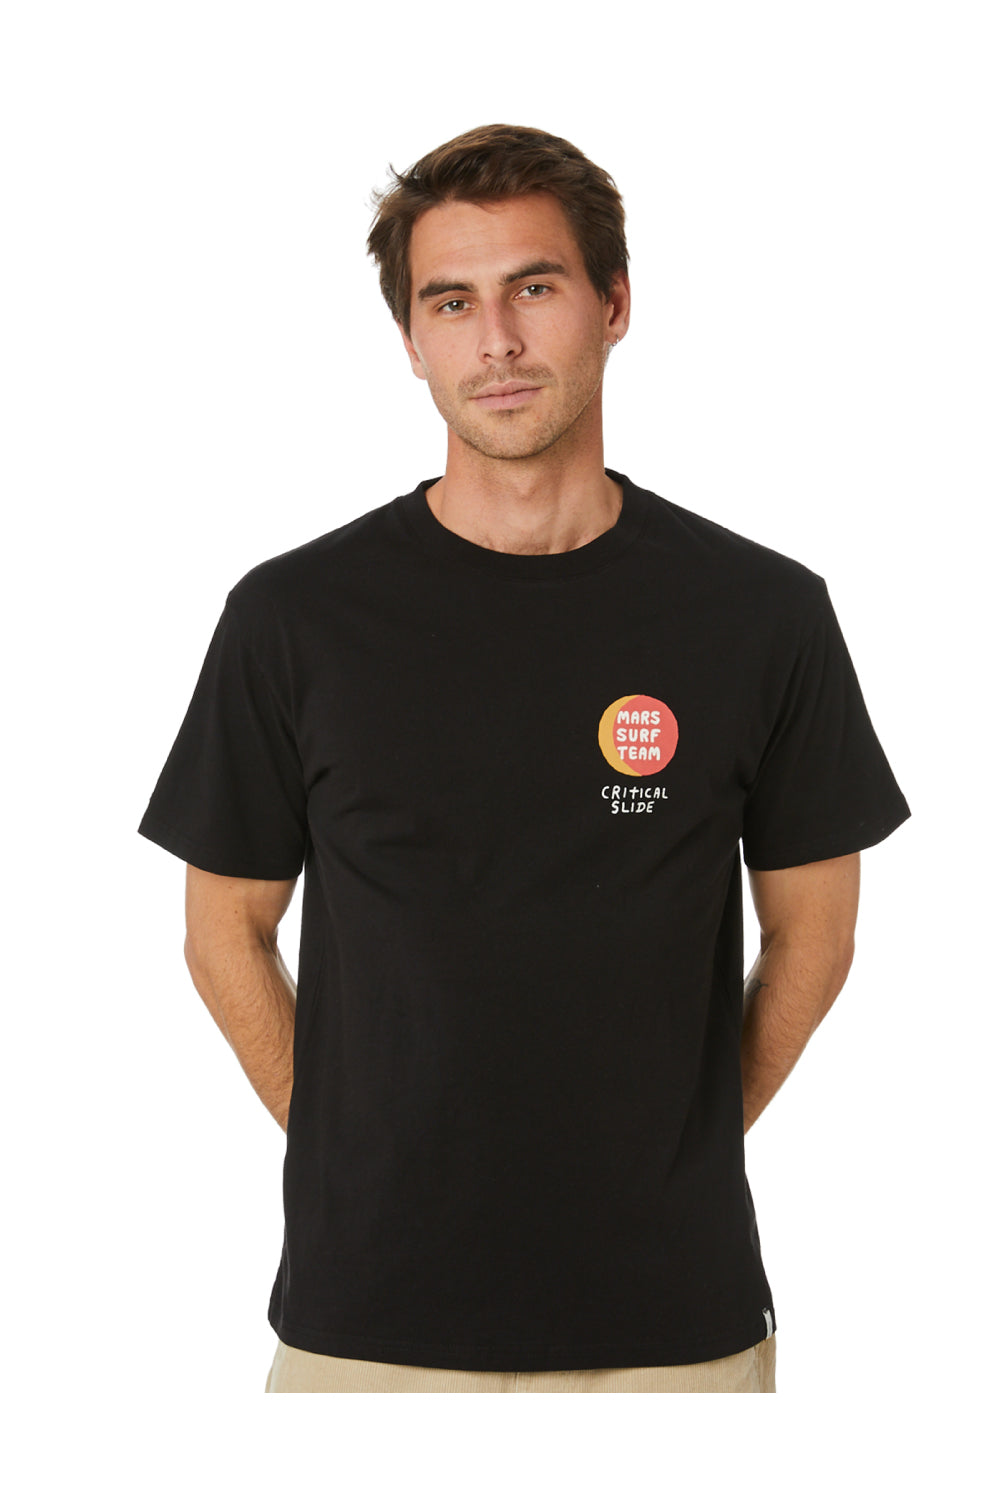 The Critical Slide Society NSOM T-Shirt